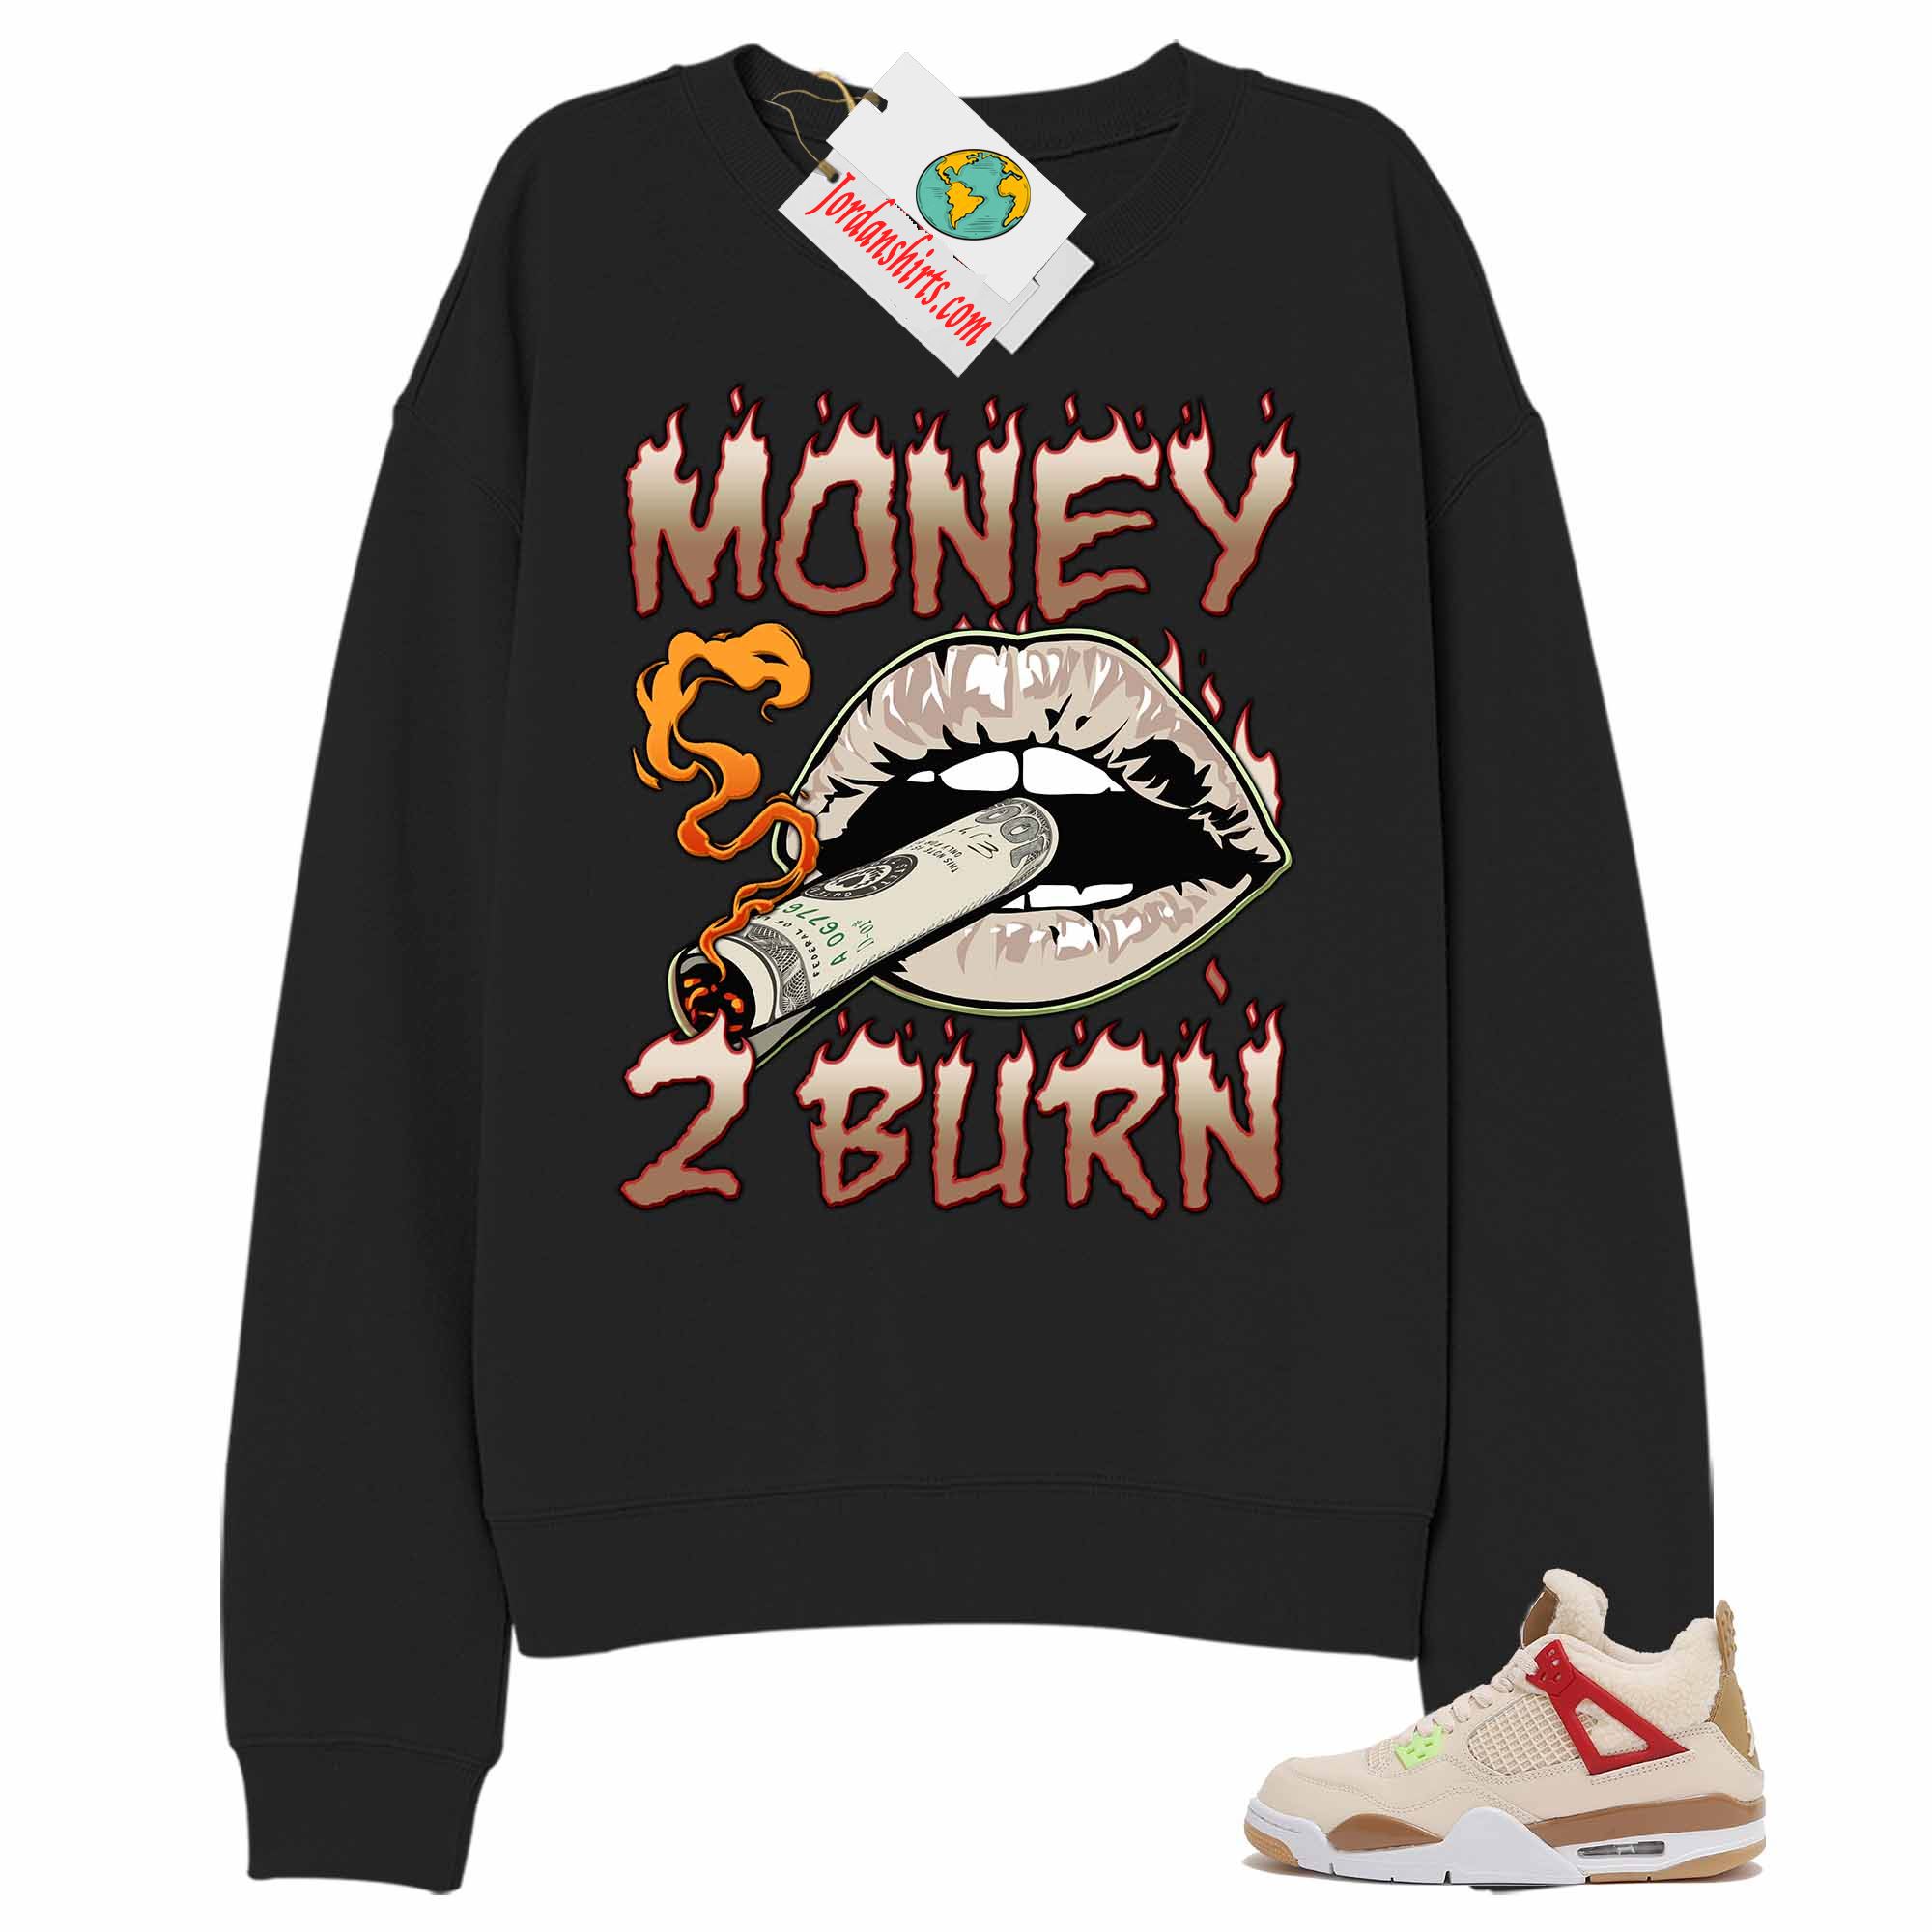 Jordan 4 Sweatshirt, Money To Burn Black Sweatshirt Air Jordan 4 Wild Things 4s Full Size Up To 5xl